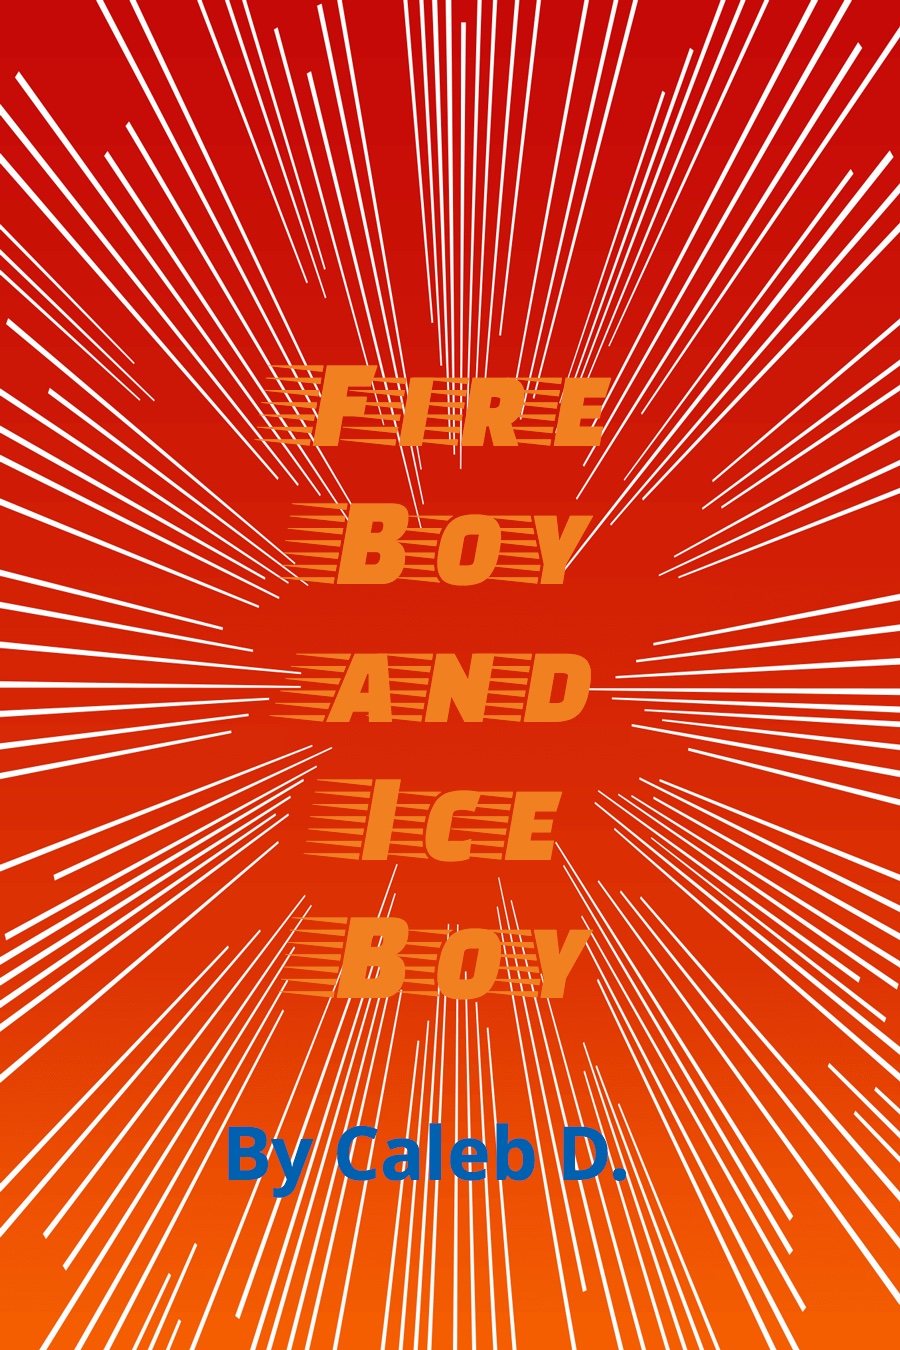 Fire Boy and Ice Boy